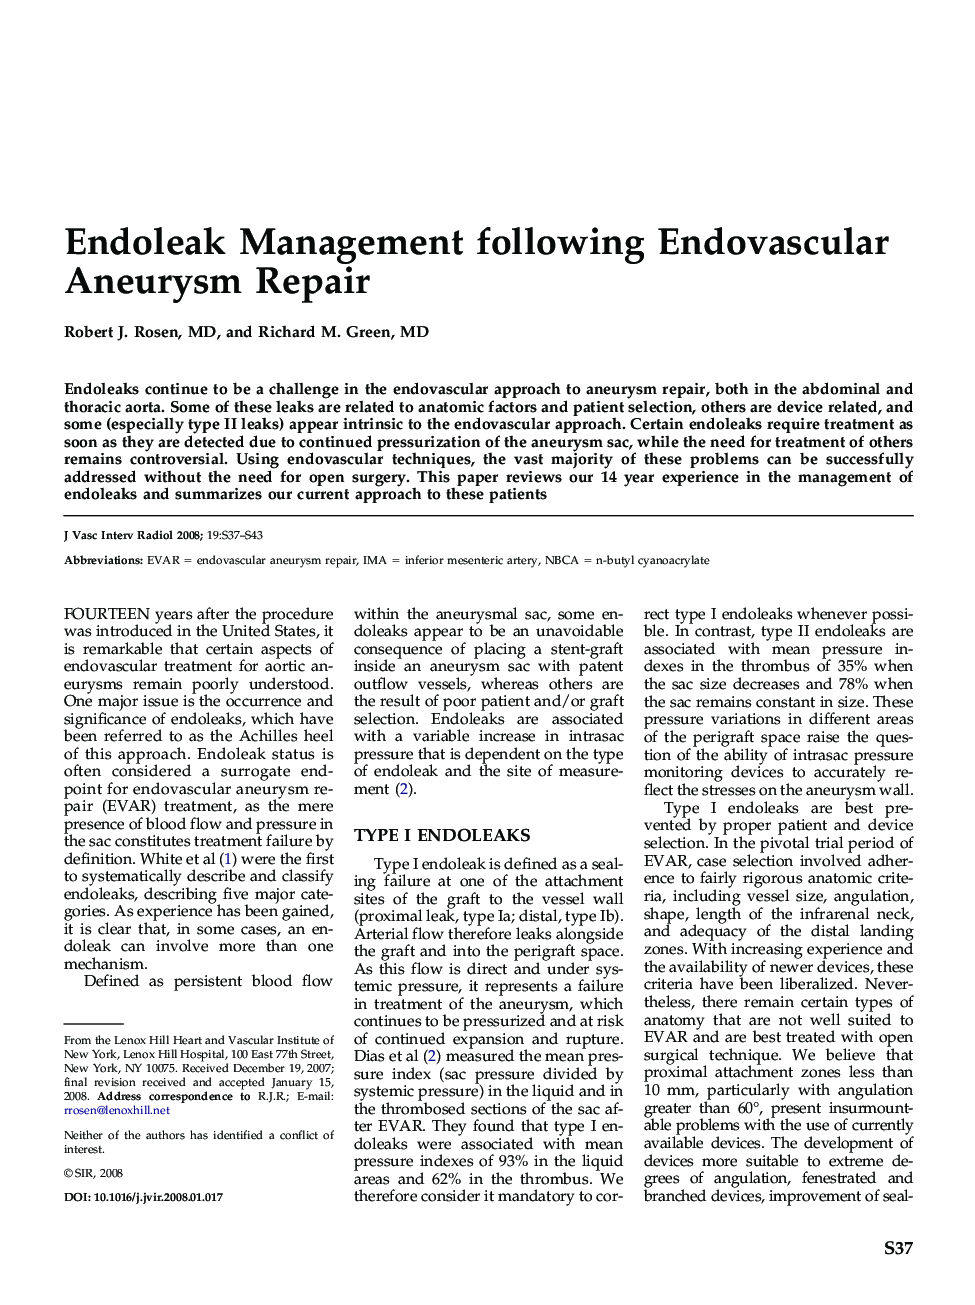 Endoleak Management following Endovascular Aneurysm Repair